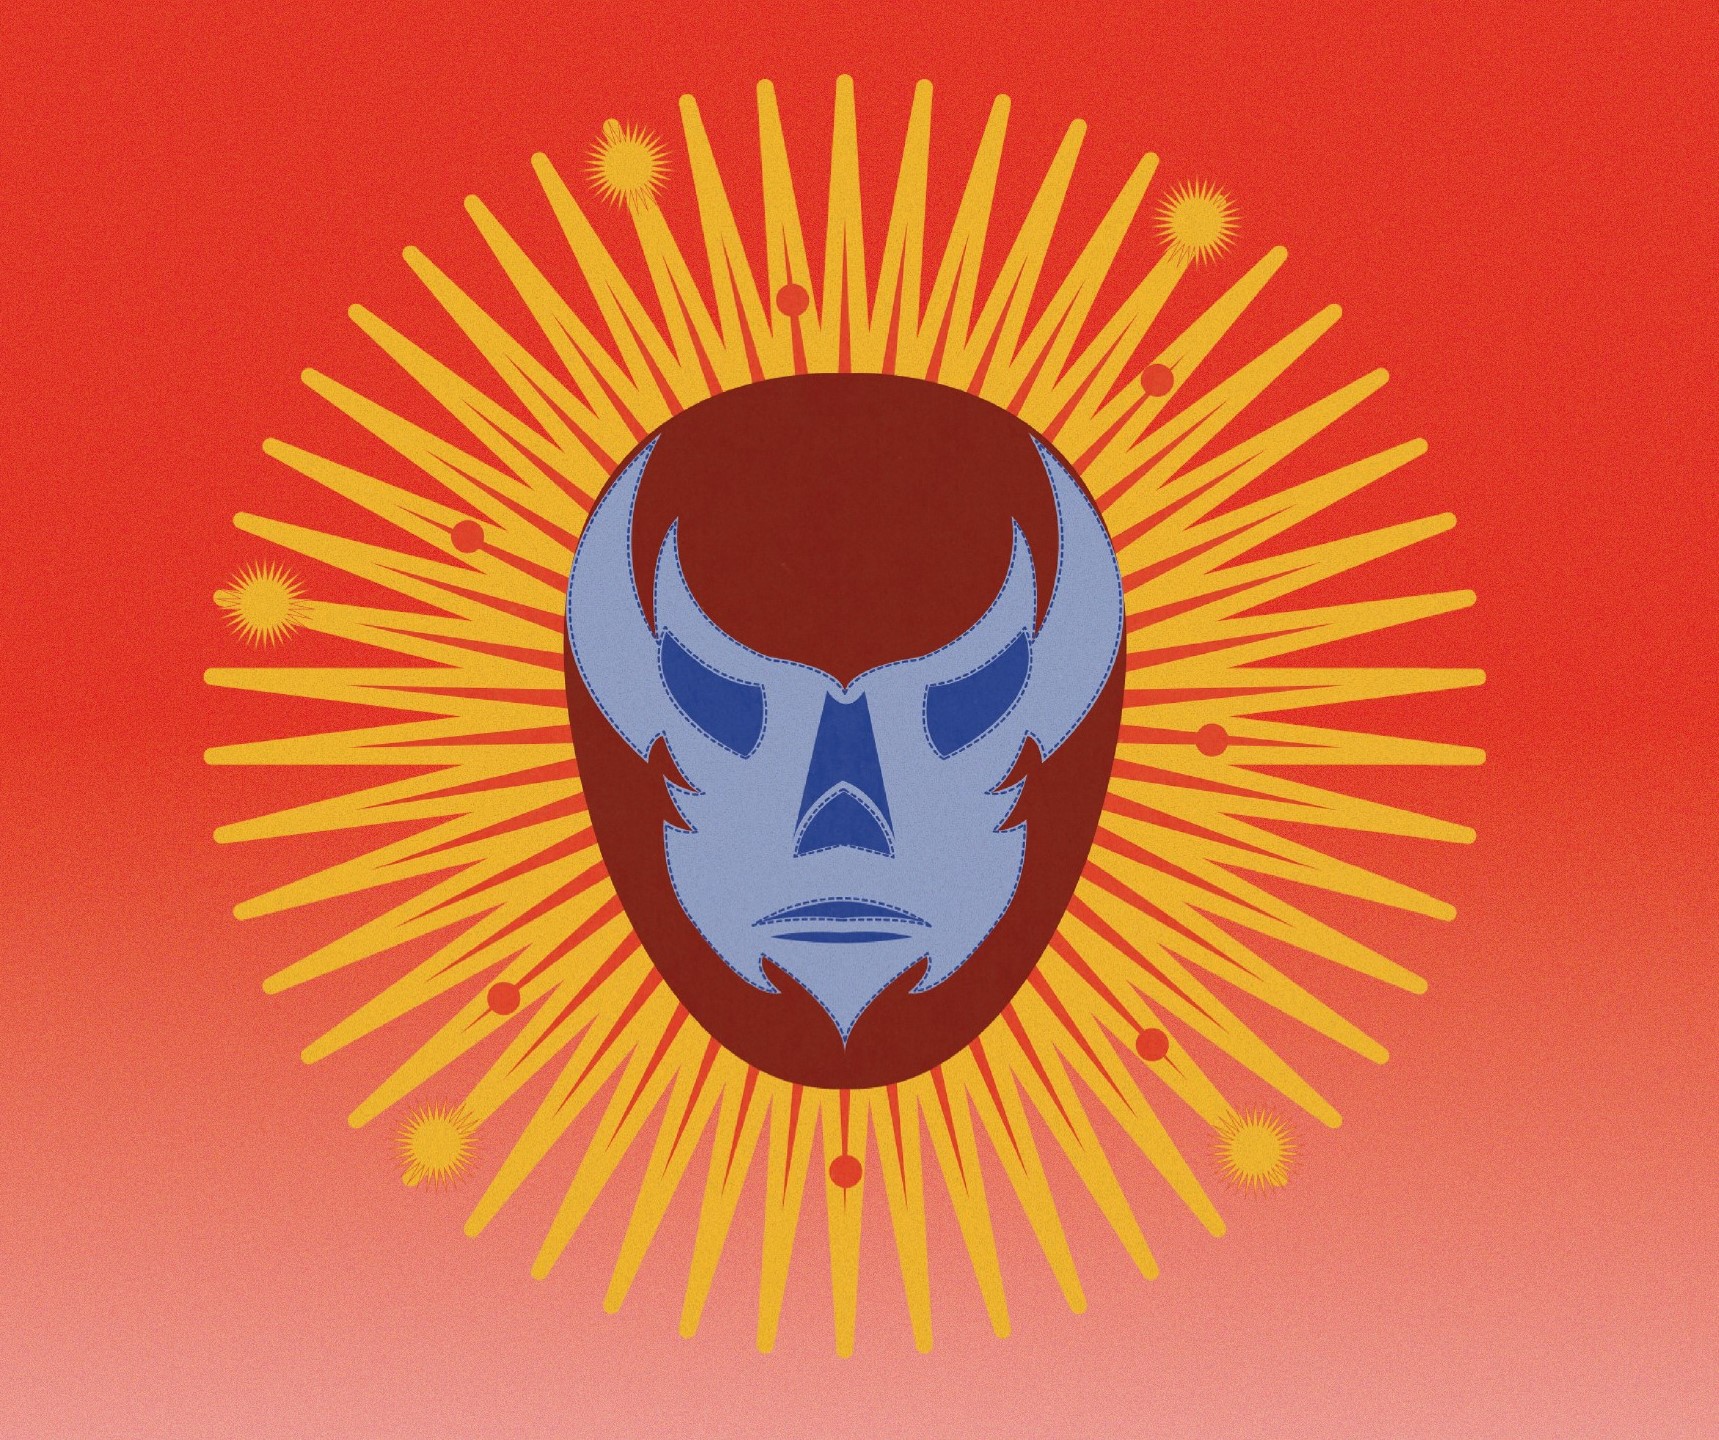 image shows luchador mask